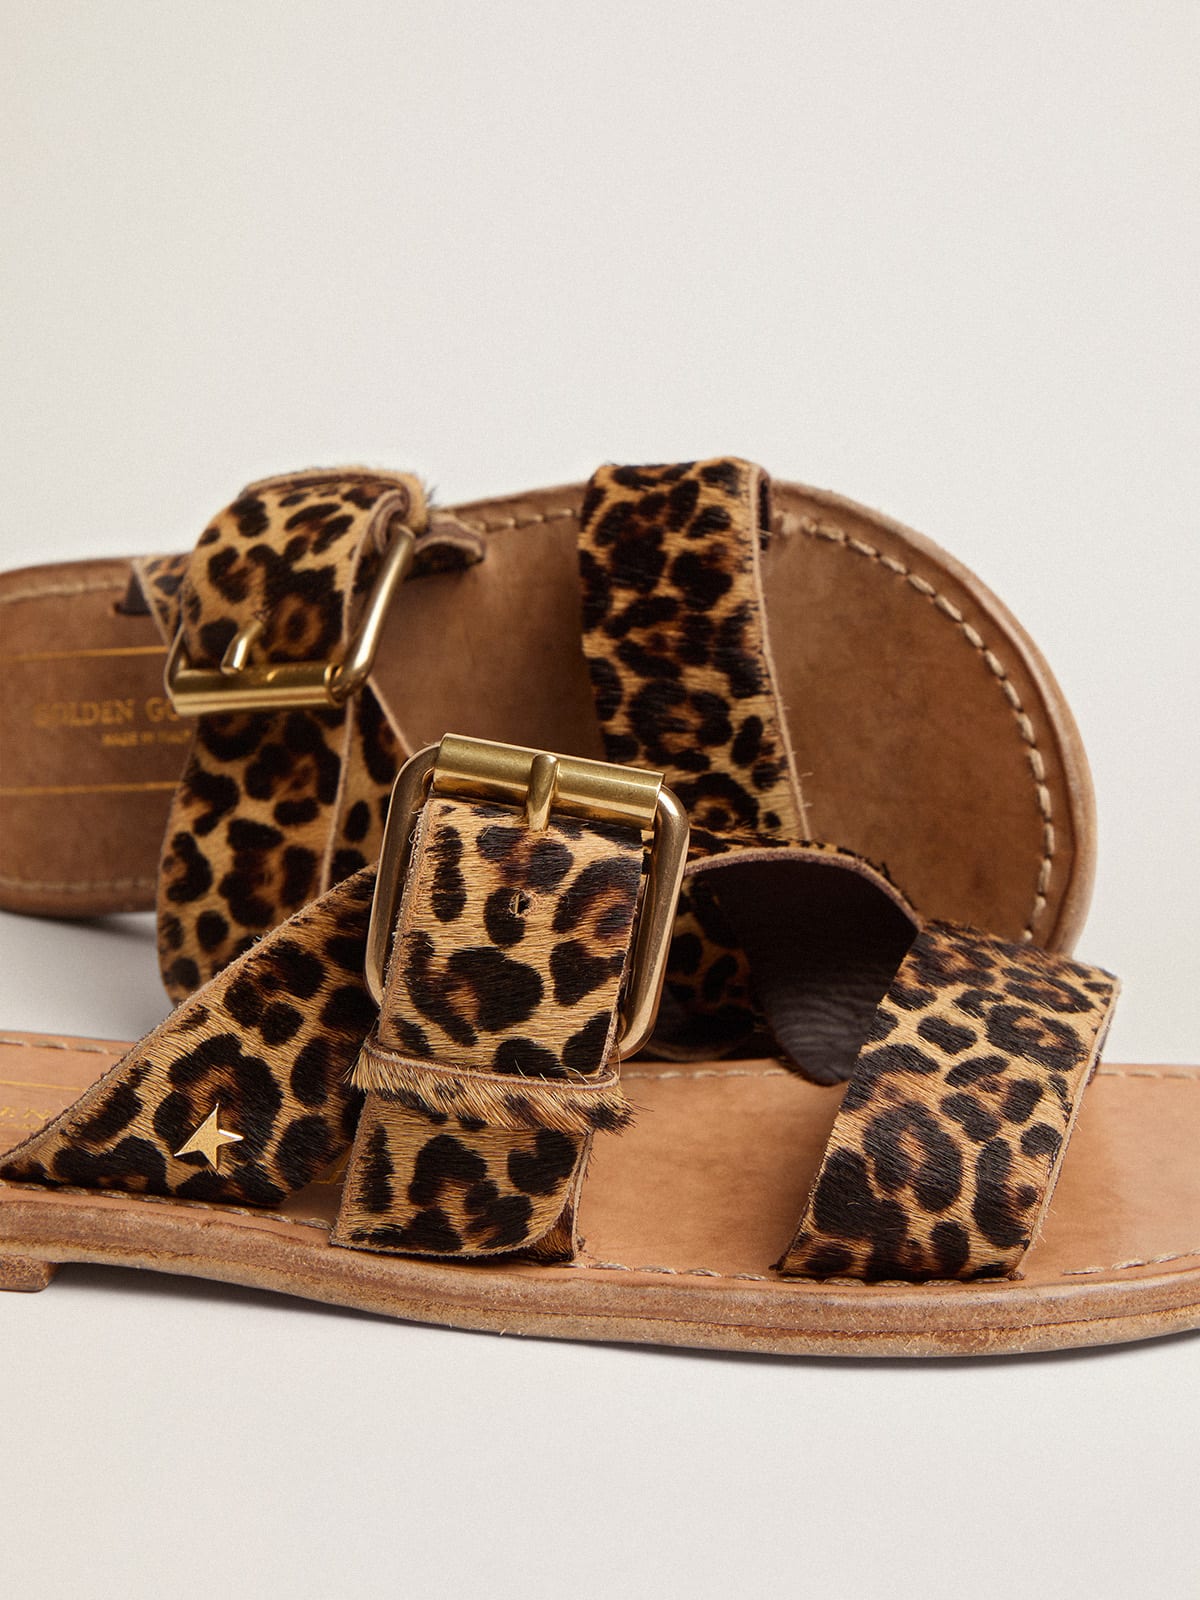 Golden Goose - Women's flat sandals in leopard print pony skin in 